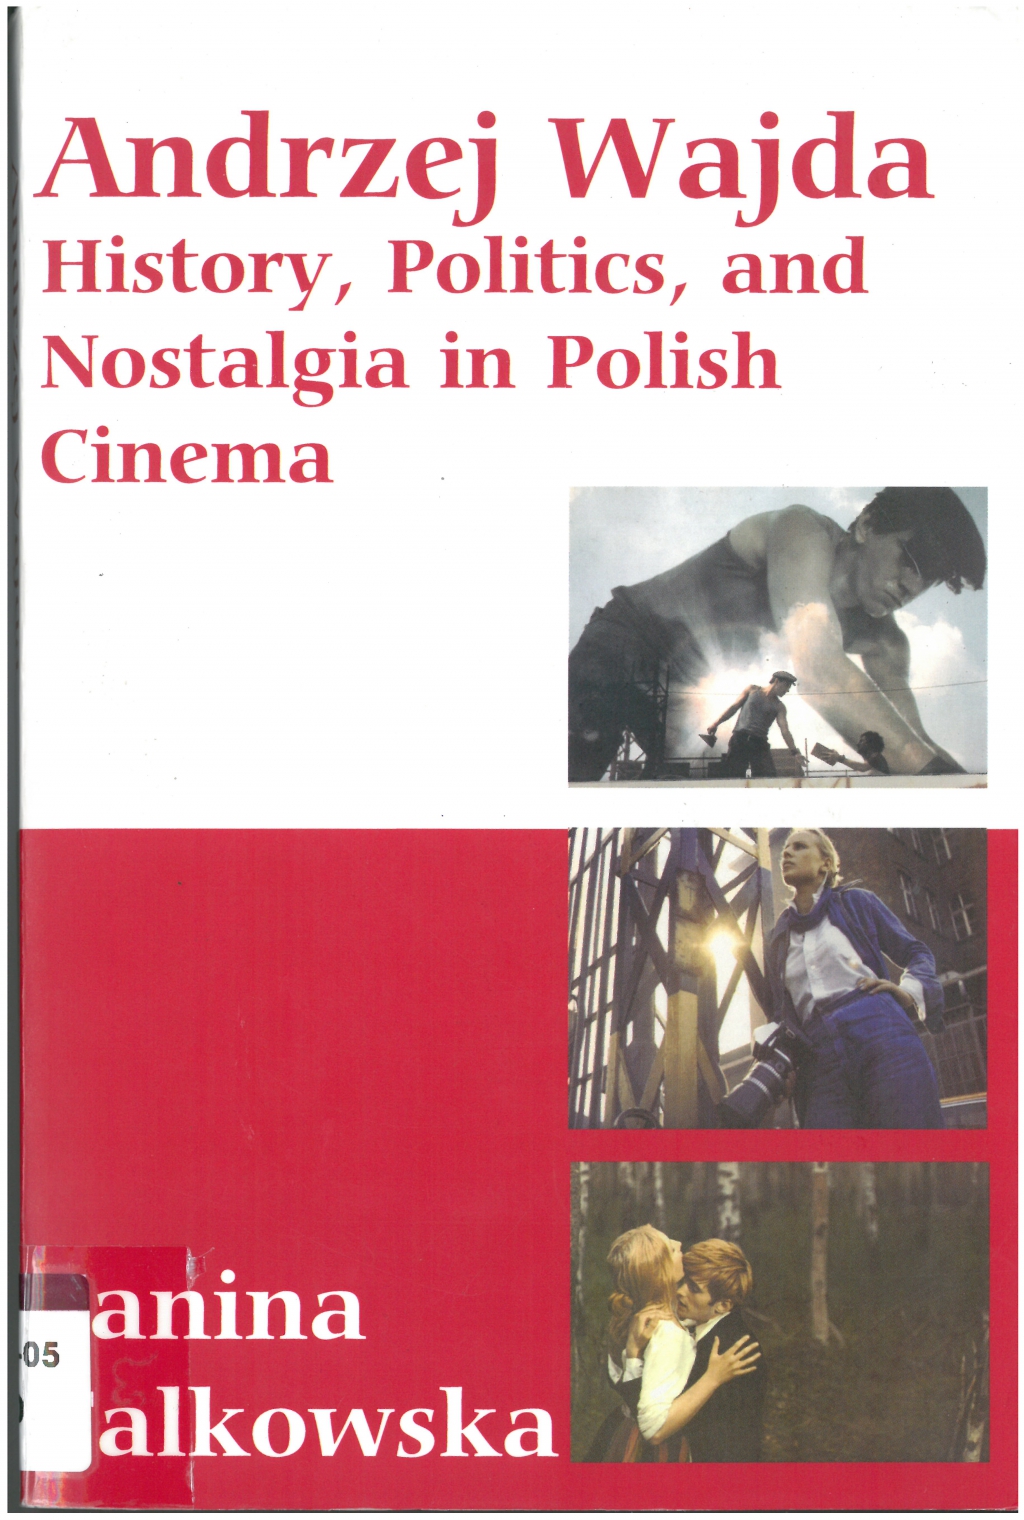 Falkowska, Janina. Andrzej Wajda: history, politics, and nostalgia in Polish cinema.  New York : Berghahn Books, 2007 - viii, 340 p. ISBN 9781845455088